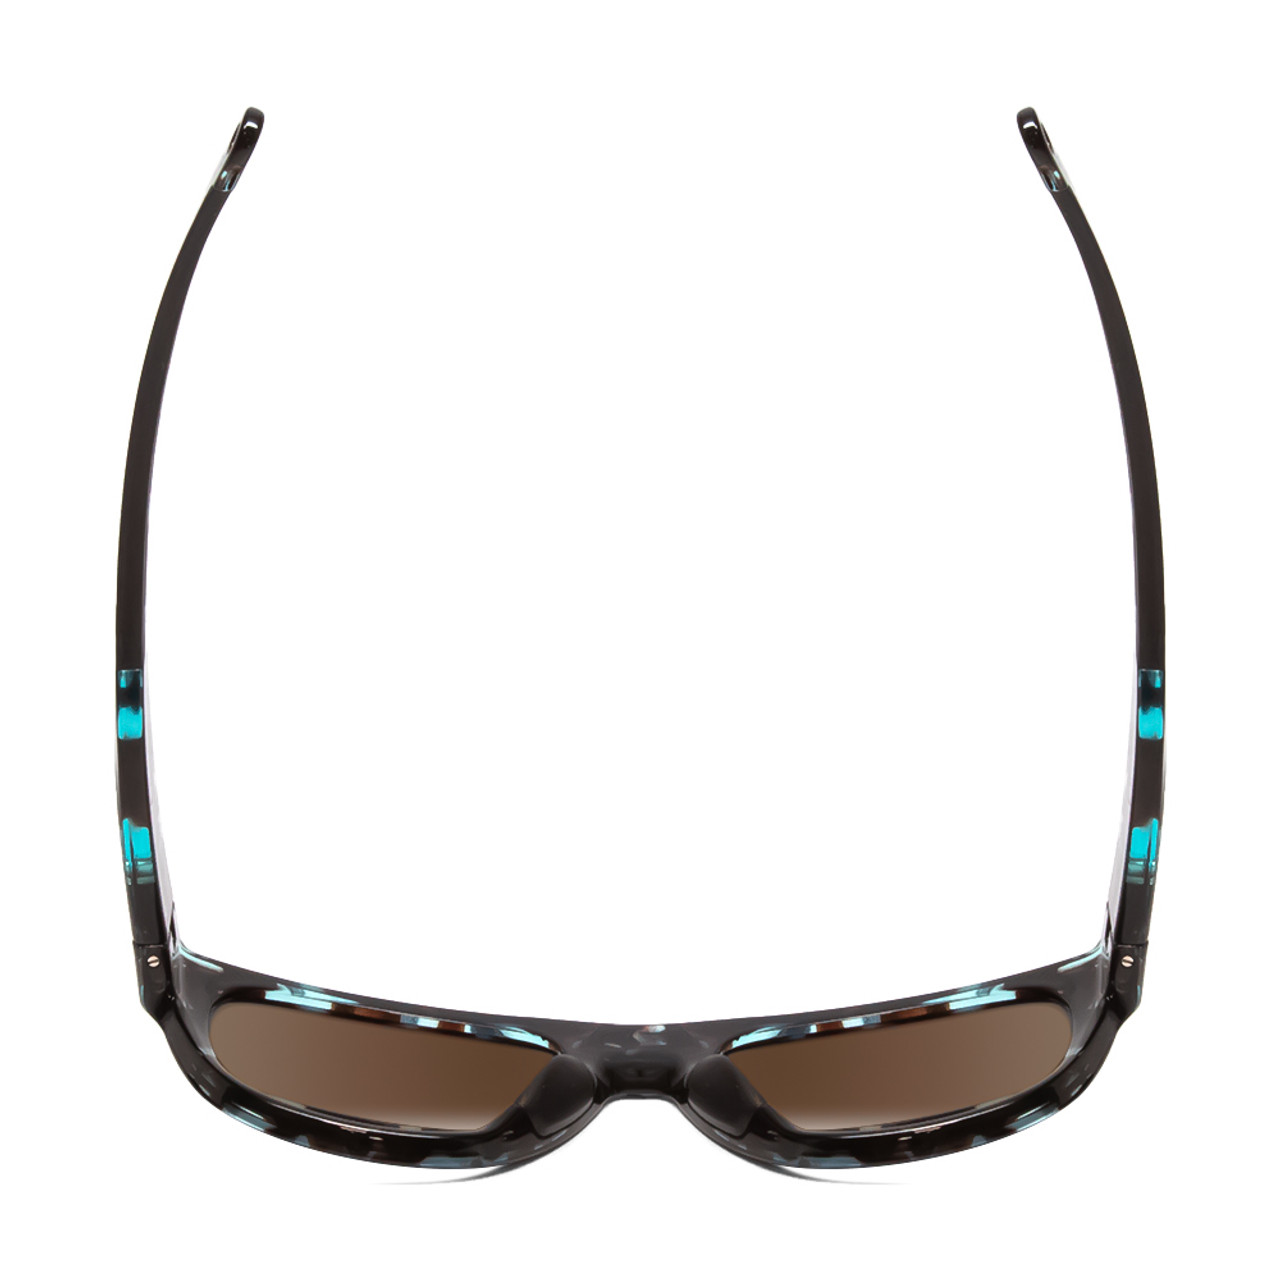 Top View of Smith Rockaway Ladies Cateye Sunglasses Tortoise/CP Polarized Blue Mirror 52 mm